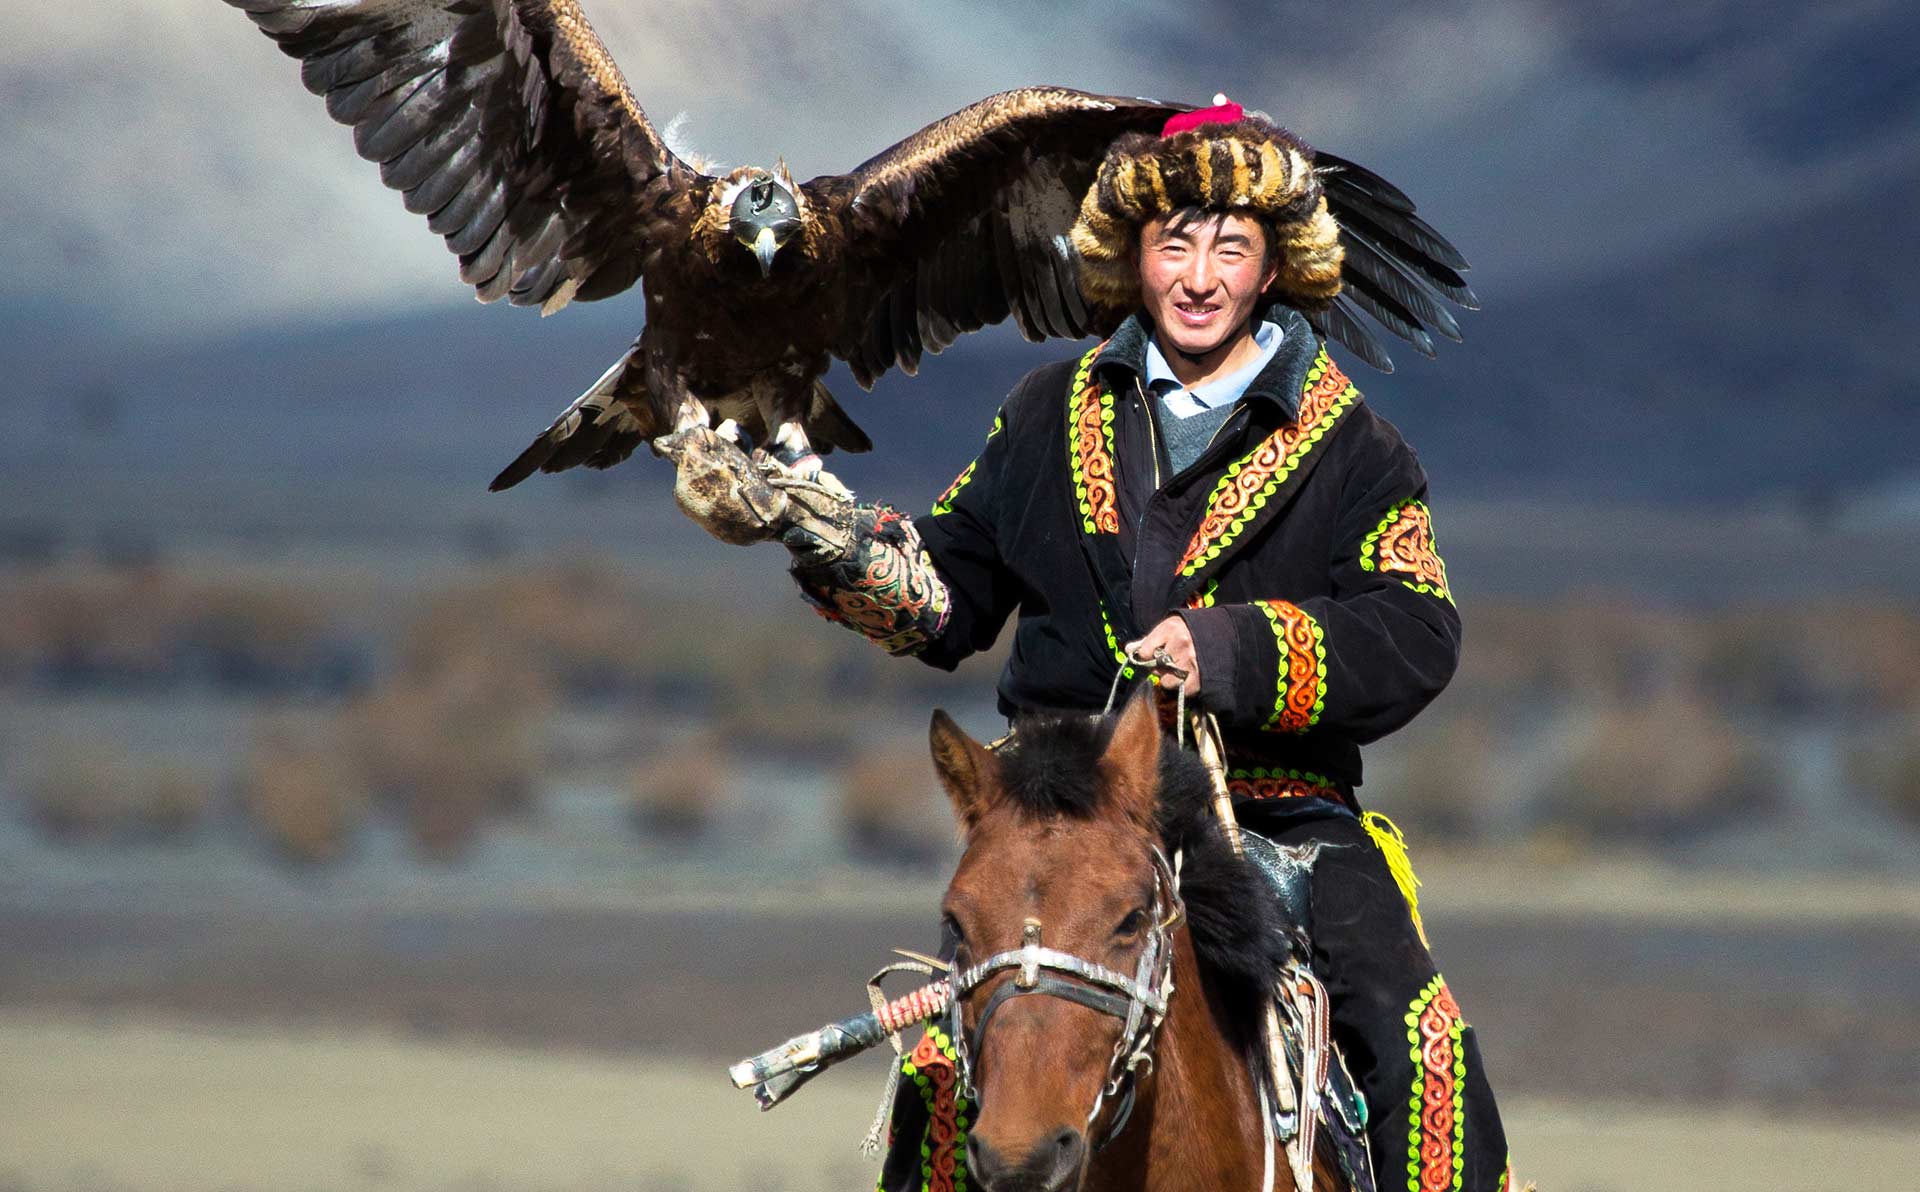 Kazakh Eagle Hunter in traditional clothing.